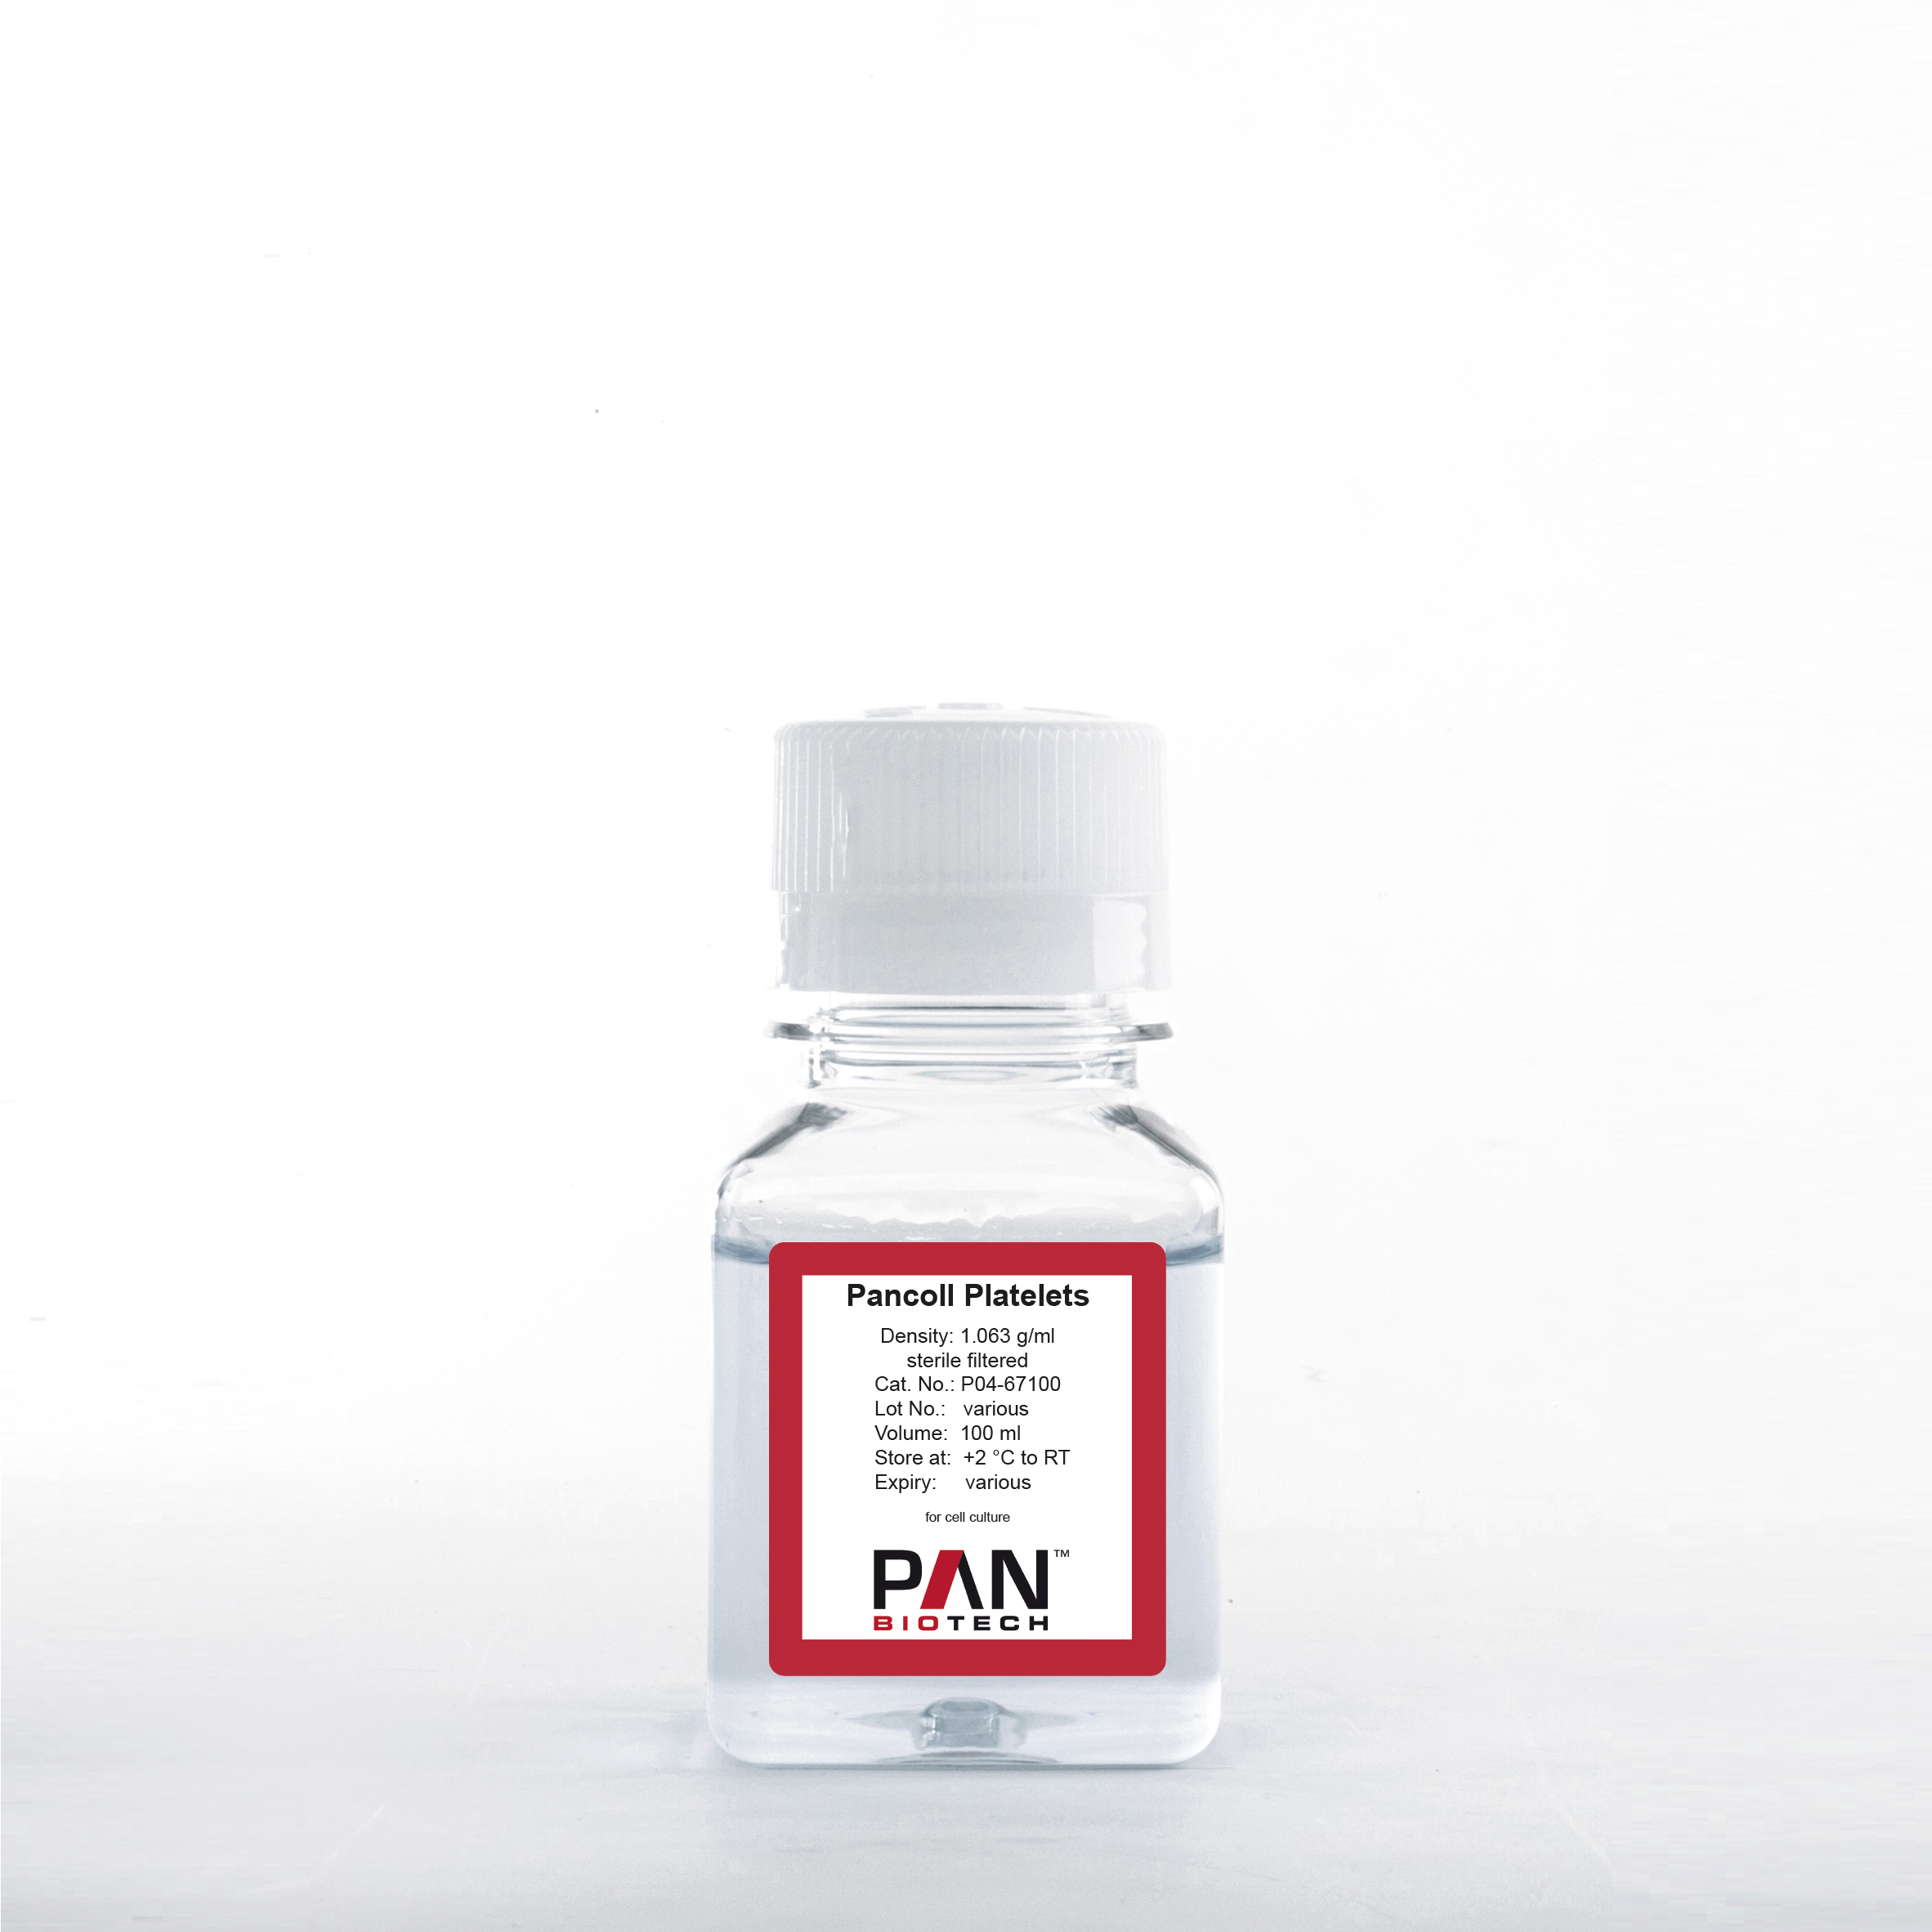 Pancoll Platelets, Density: 1.063 g/ml